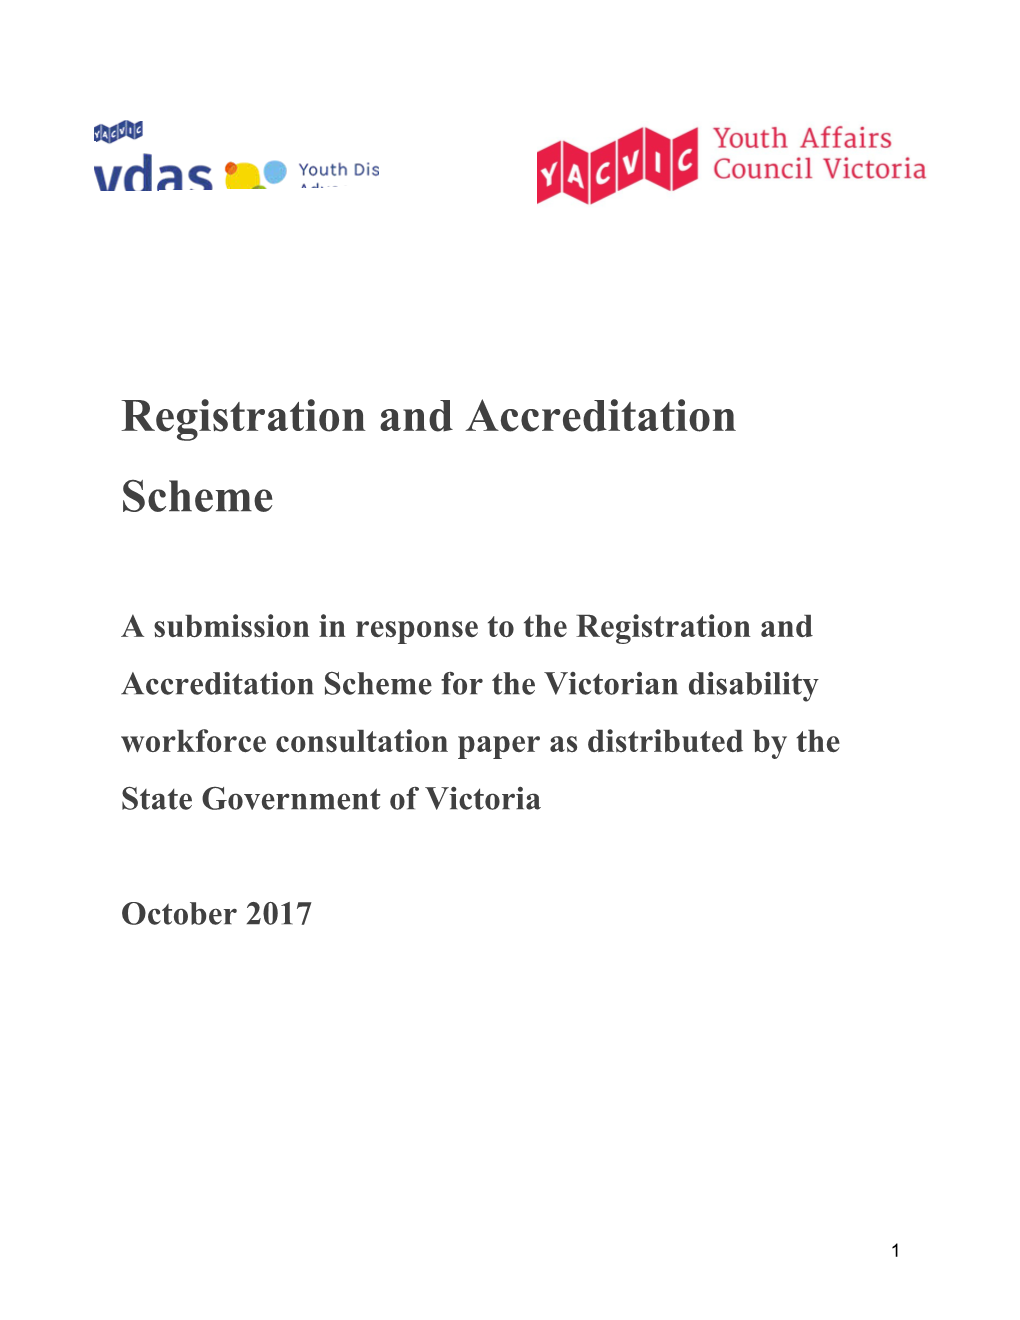 Registration and Accreditation Scheme